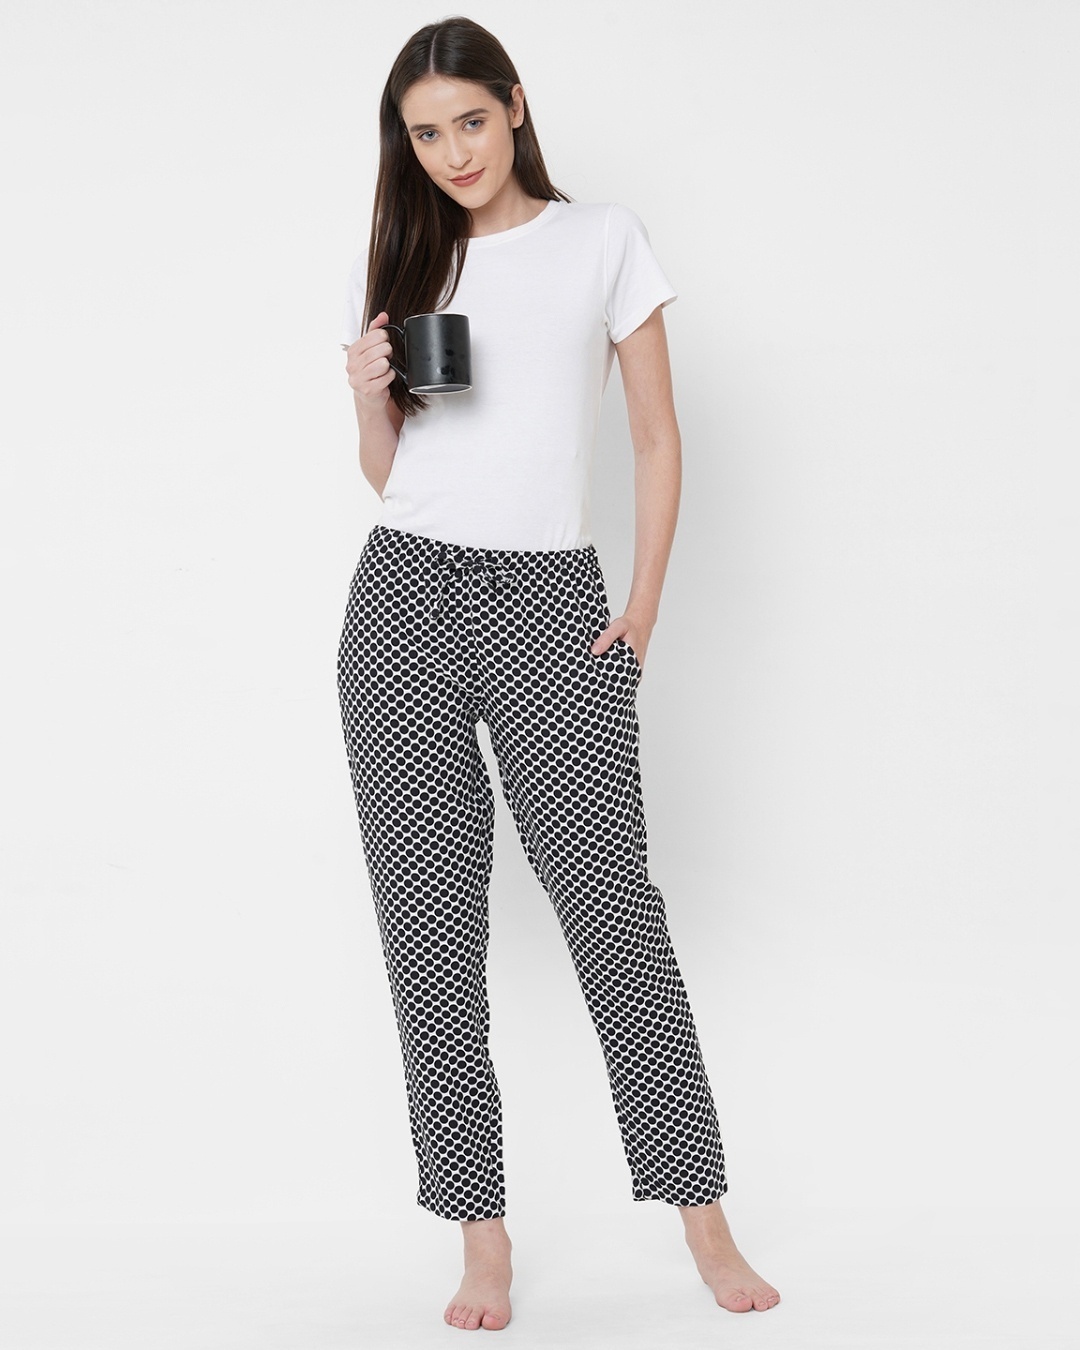 Shop Women's Black & White All Over Polka Printed Lounge Pants